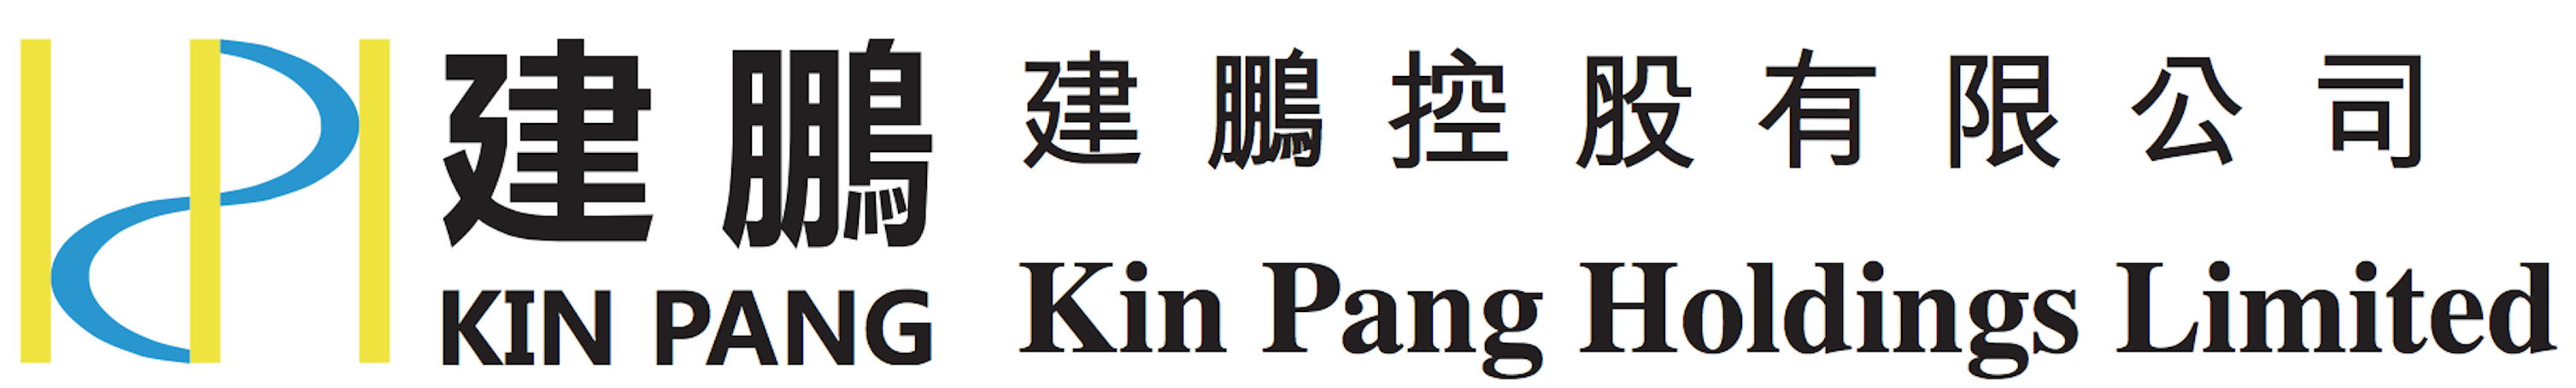 KIN PANG HOLDINGS LIMITED